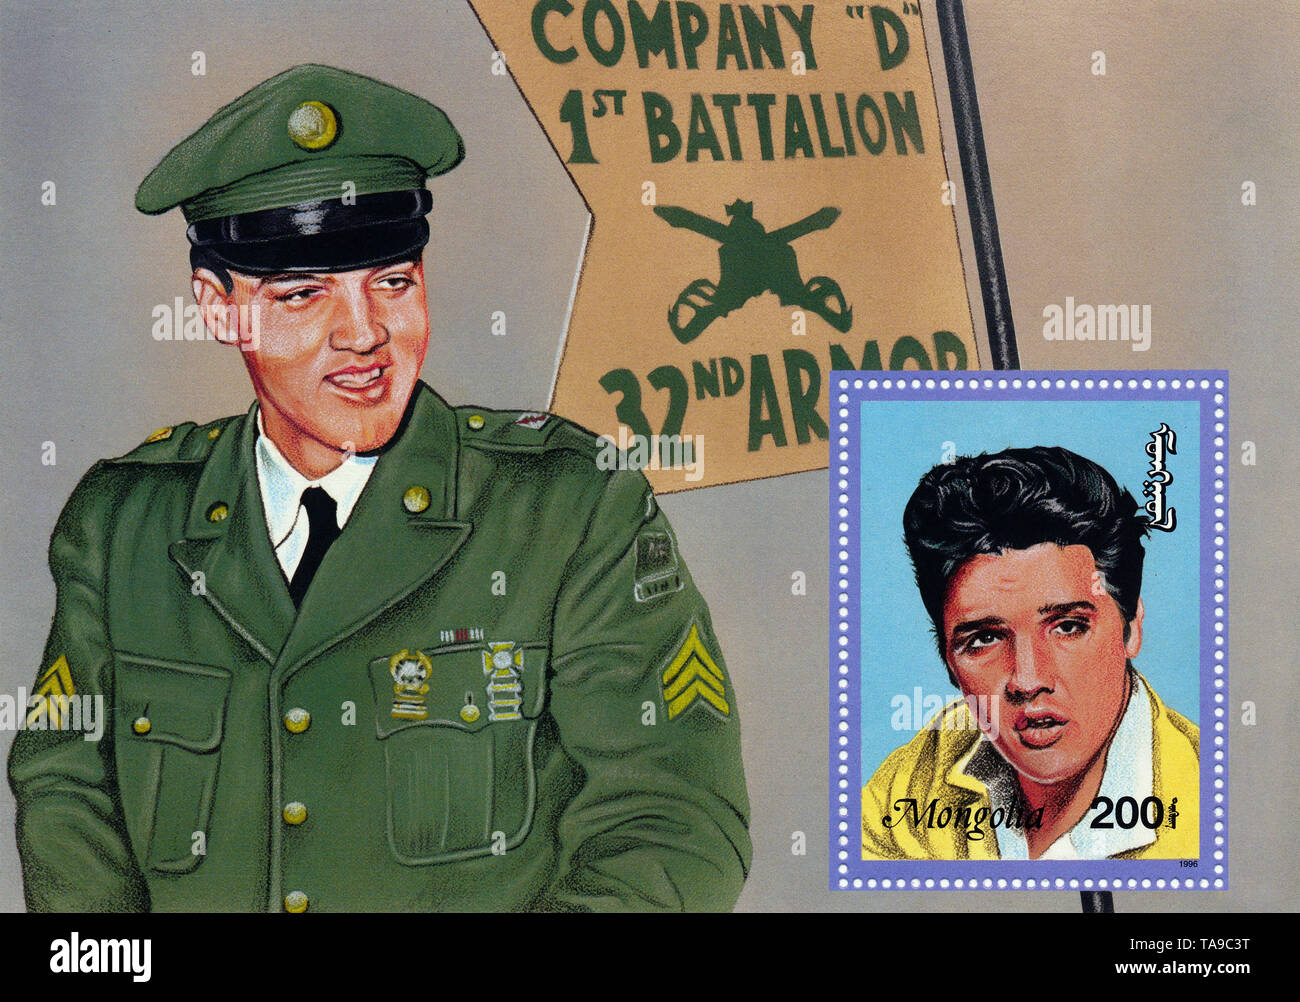 Stamps from Mongolia, Elvis Presley in the Army, 1996, Briefmarke aus der Mongolei, Elvis Presley bei der Armee, 1996 Stock Photo